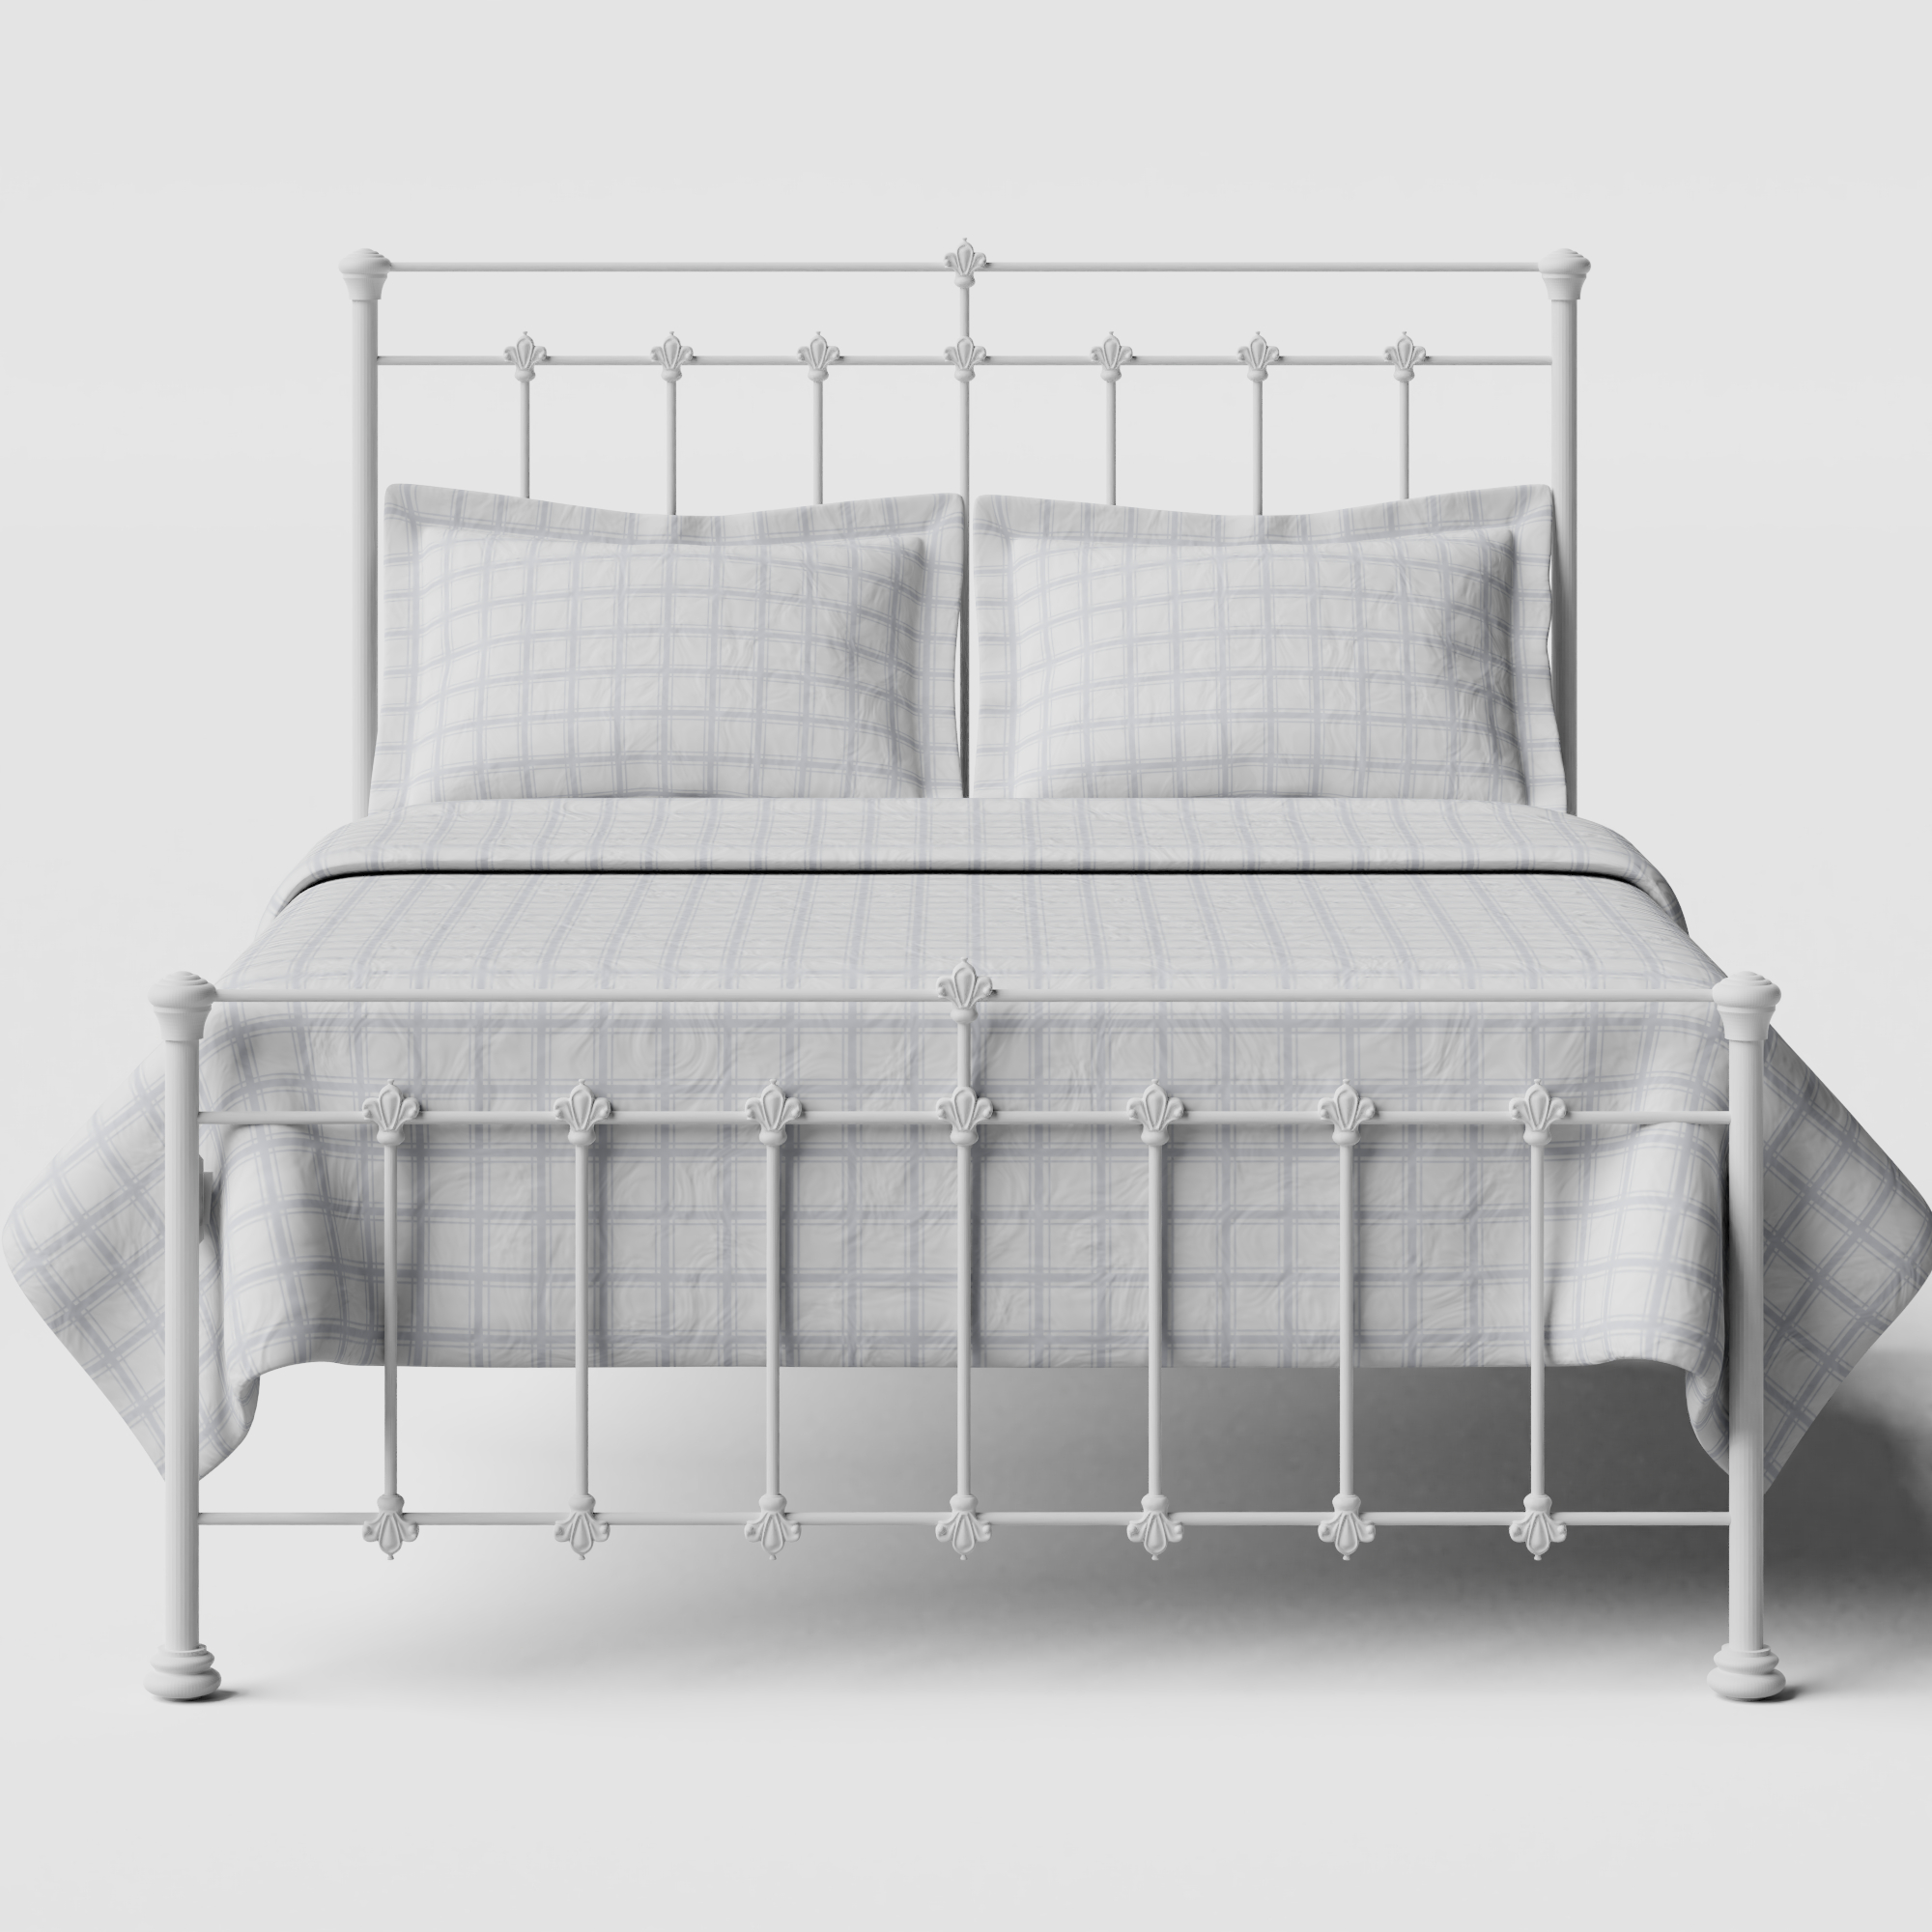 Edwardian iron/metal bed in white